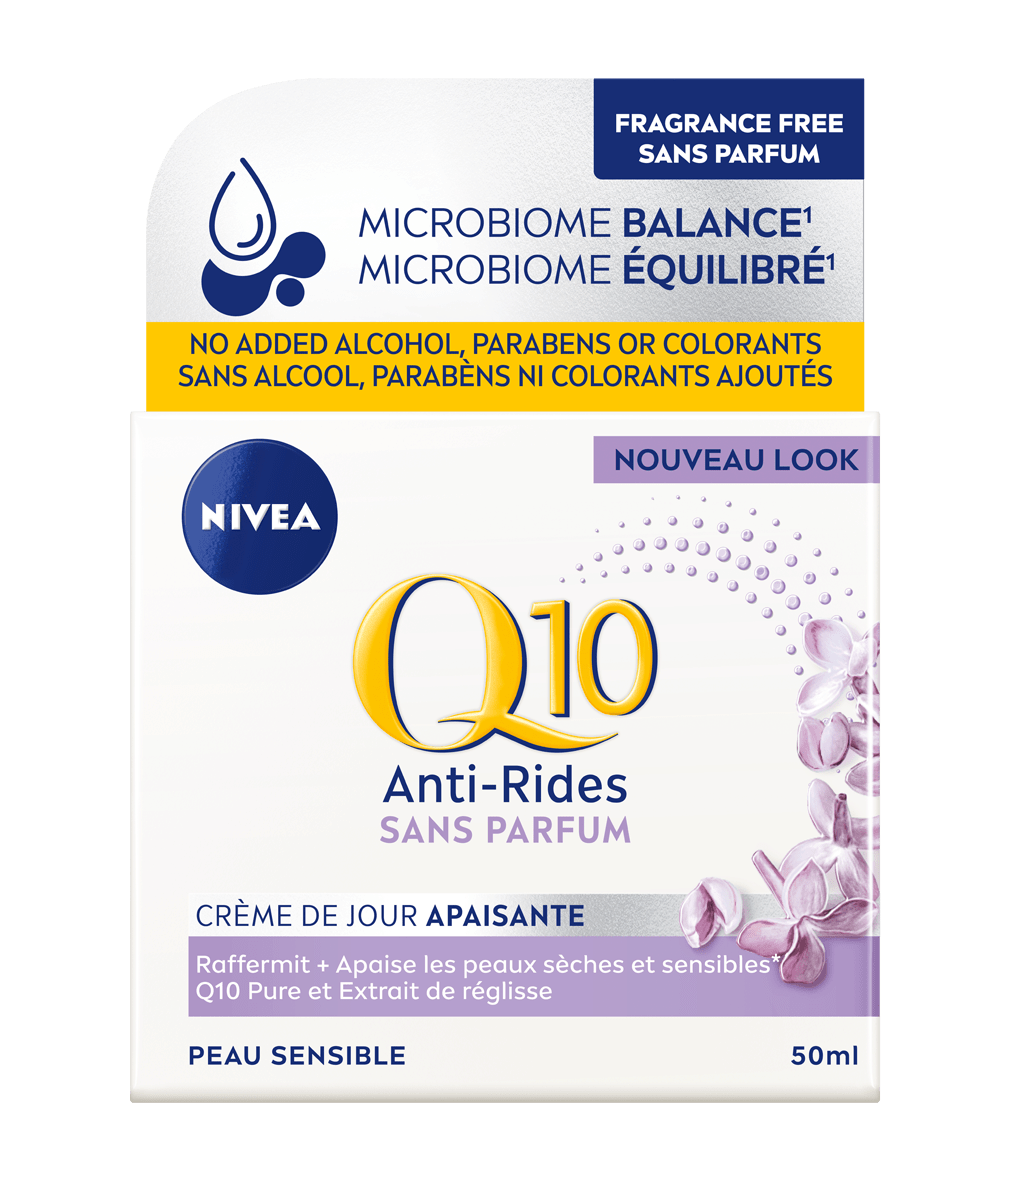 Q10 Anti-wrinkle  Fragance Free Day cream